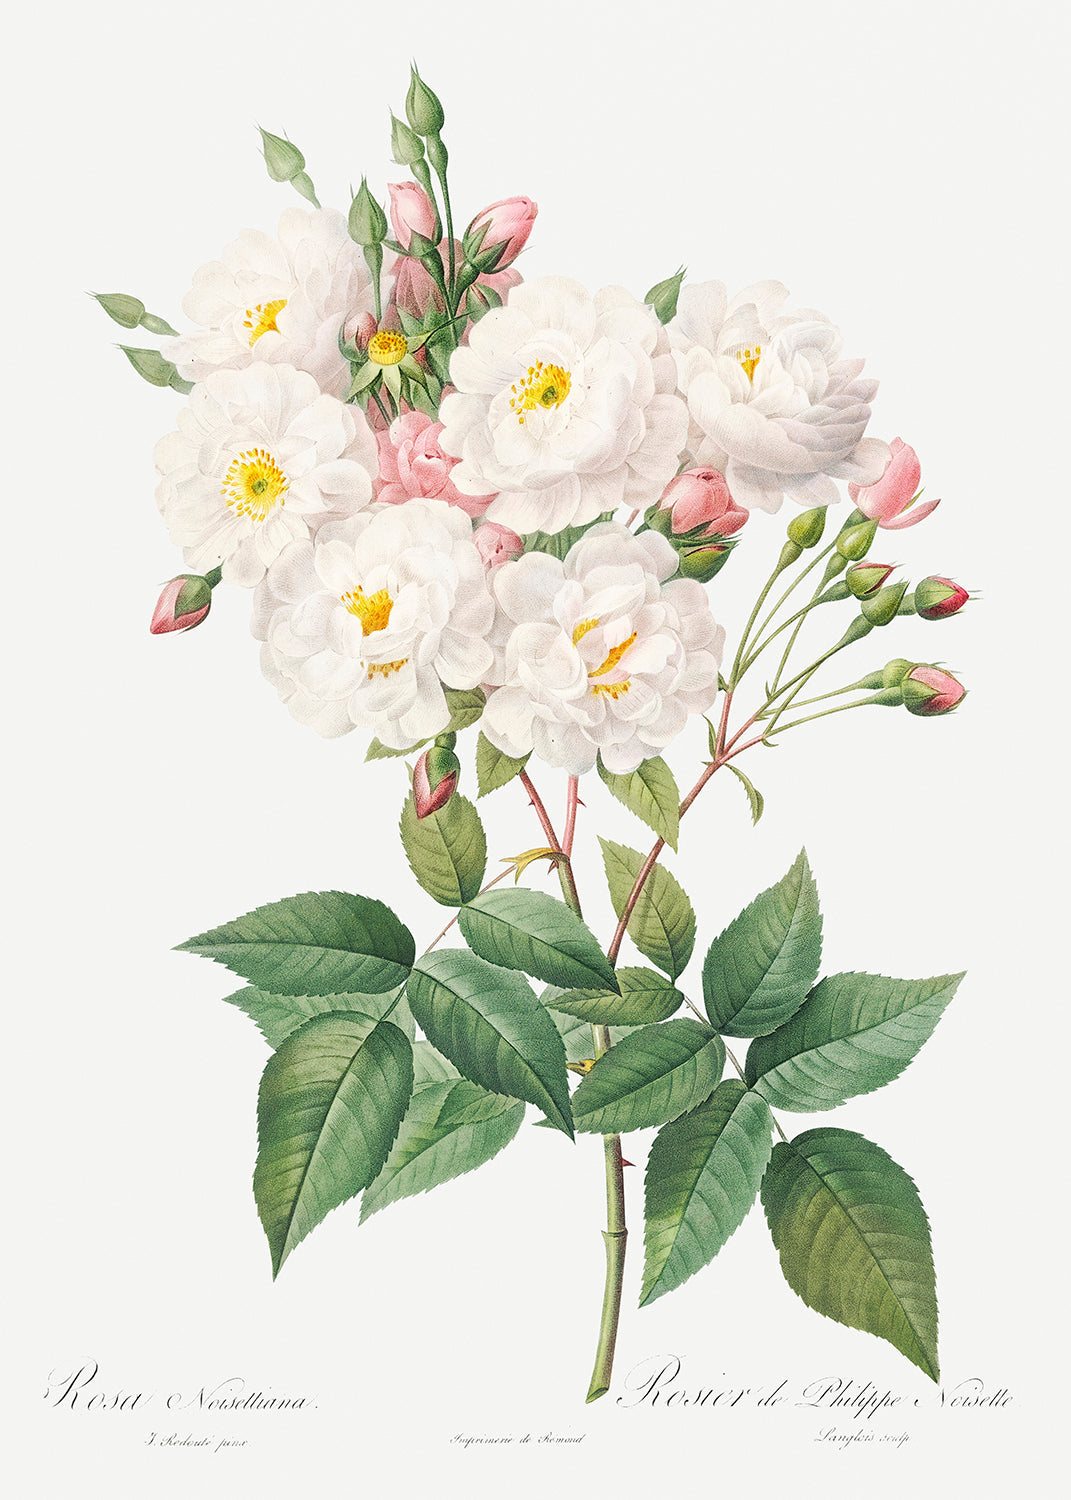 Botanical Plant Print - Rosa noisettiana (Rose of Philippe Noiselle) by Pierre Joseph Redoute